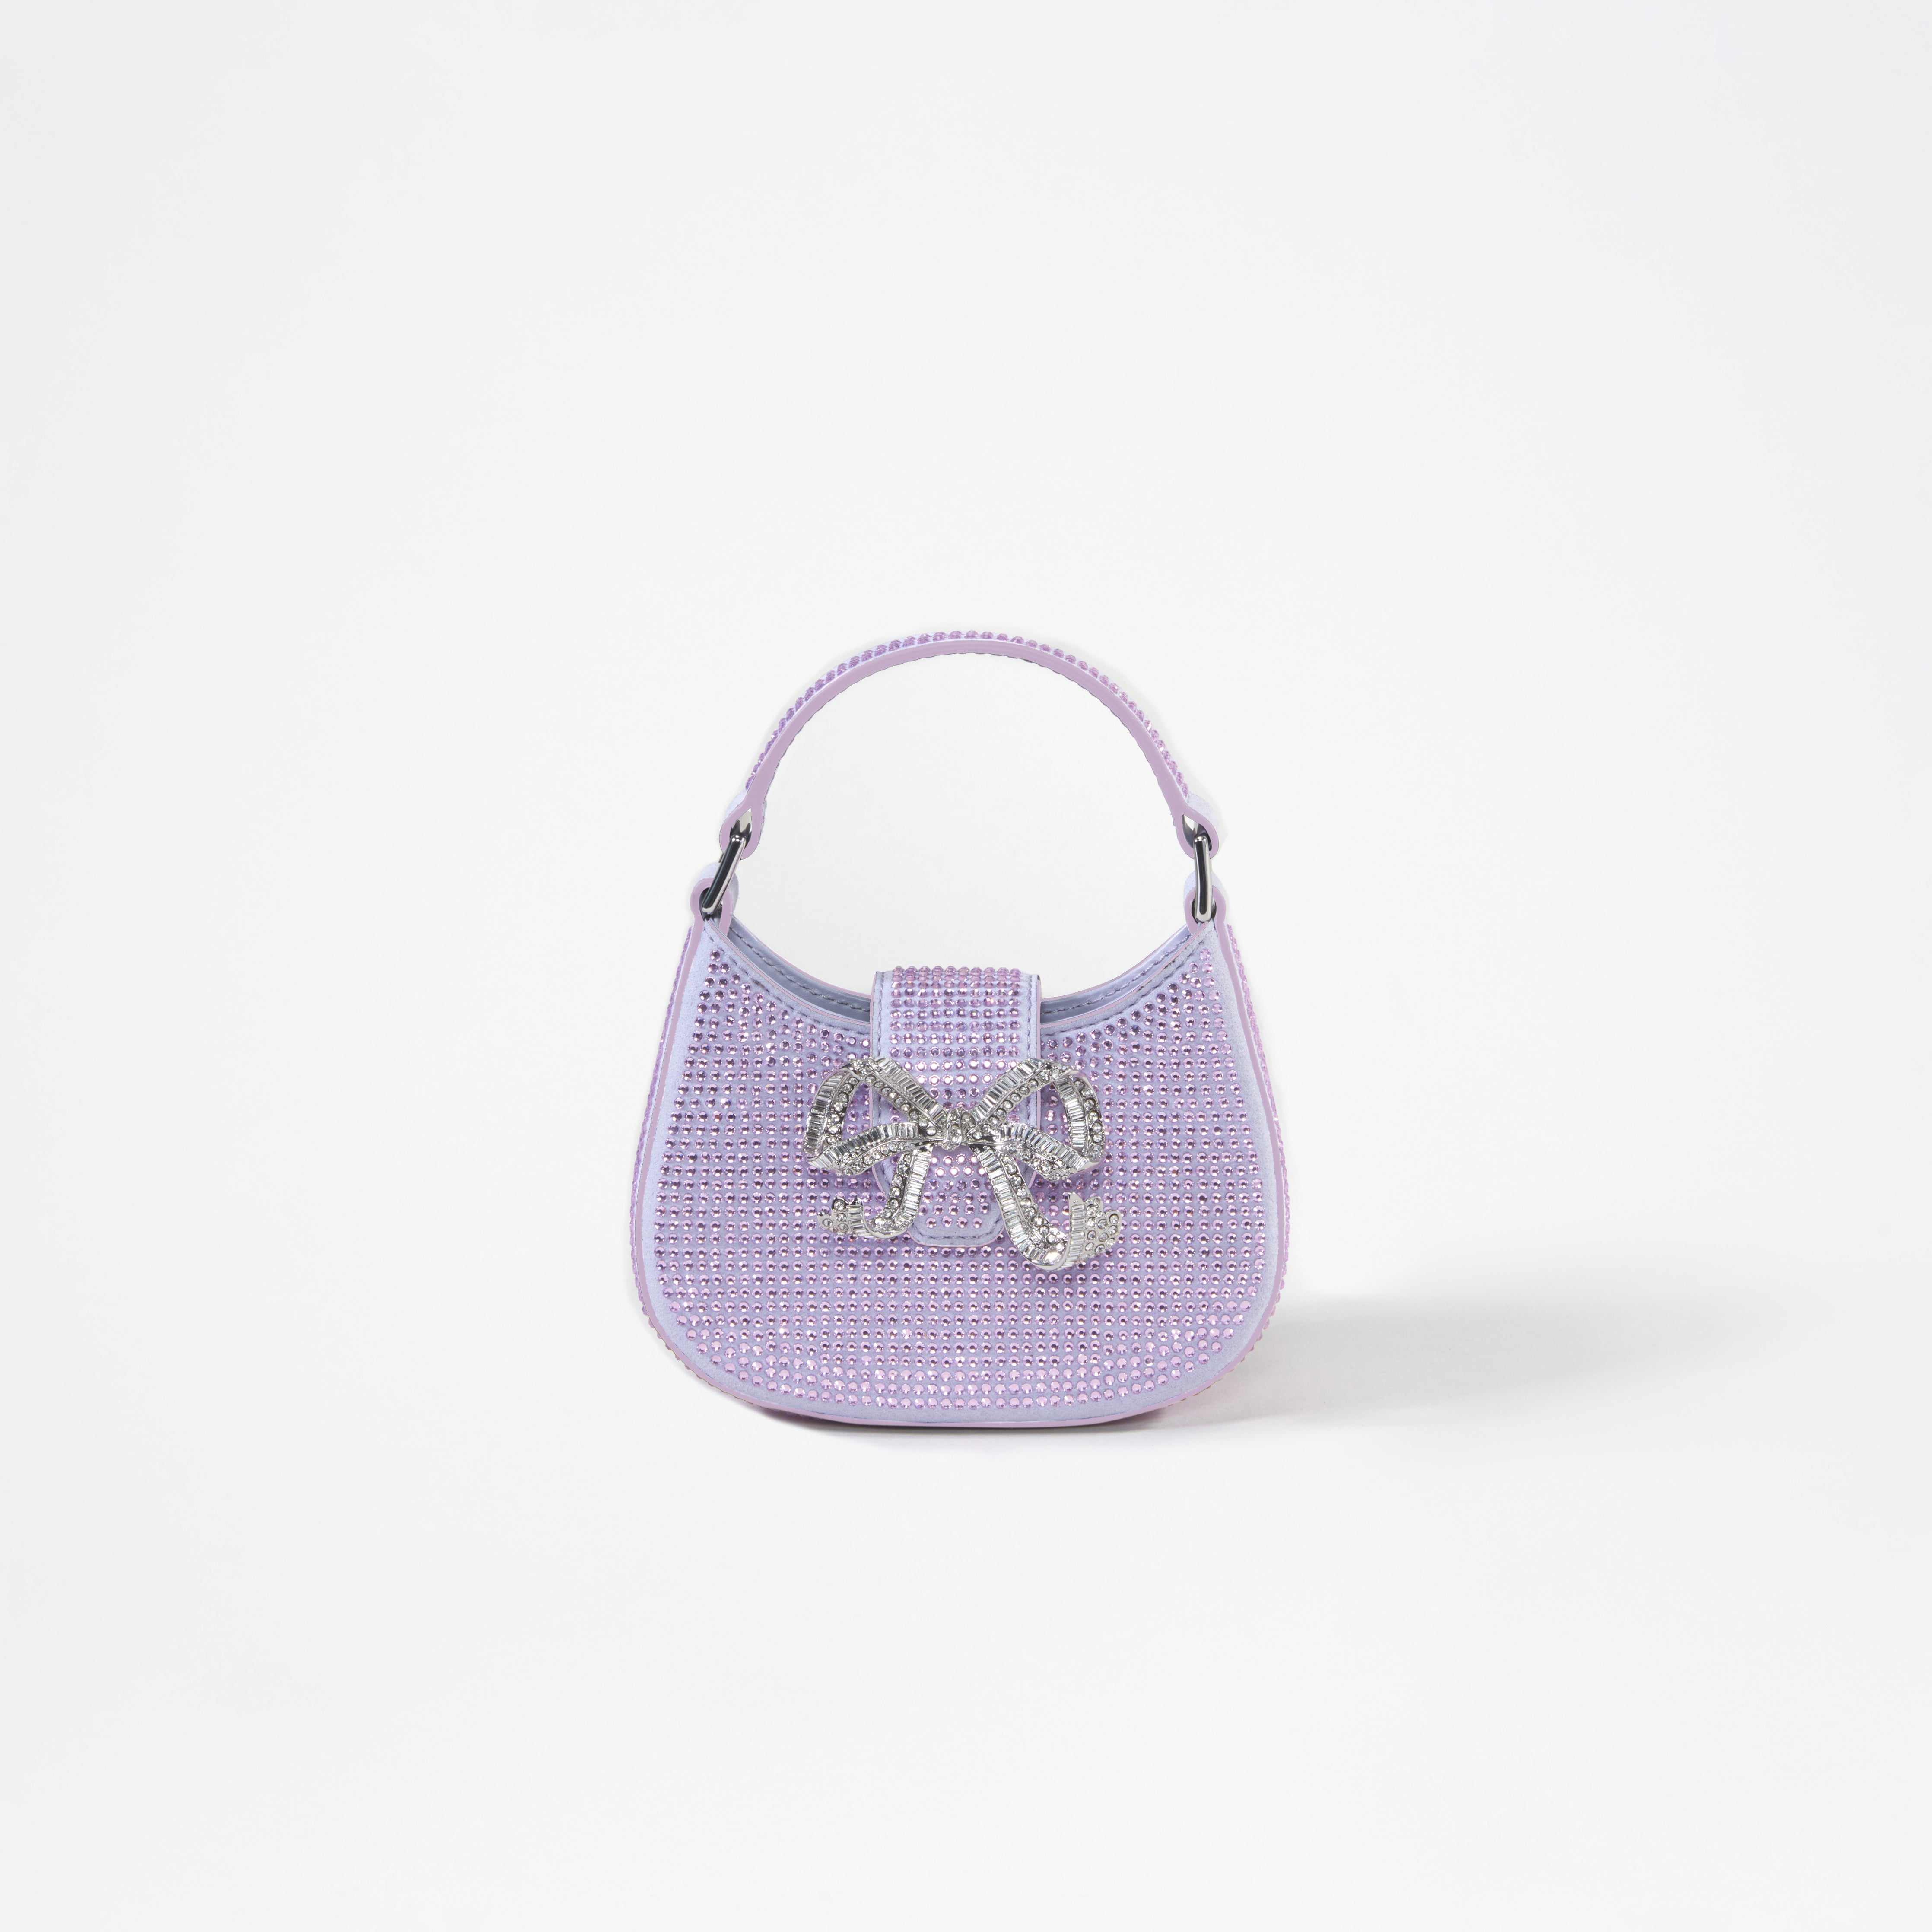 Crafty Alex: DIY - Glitter purse and kit - How to make a purse